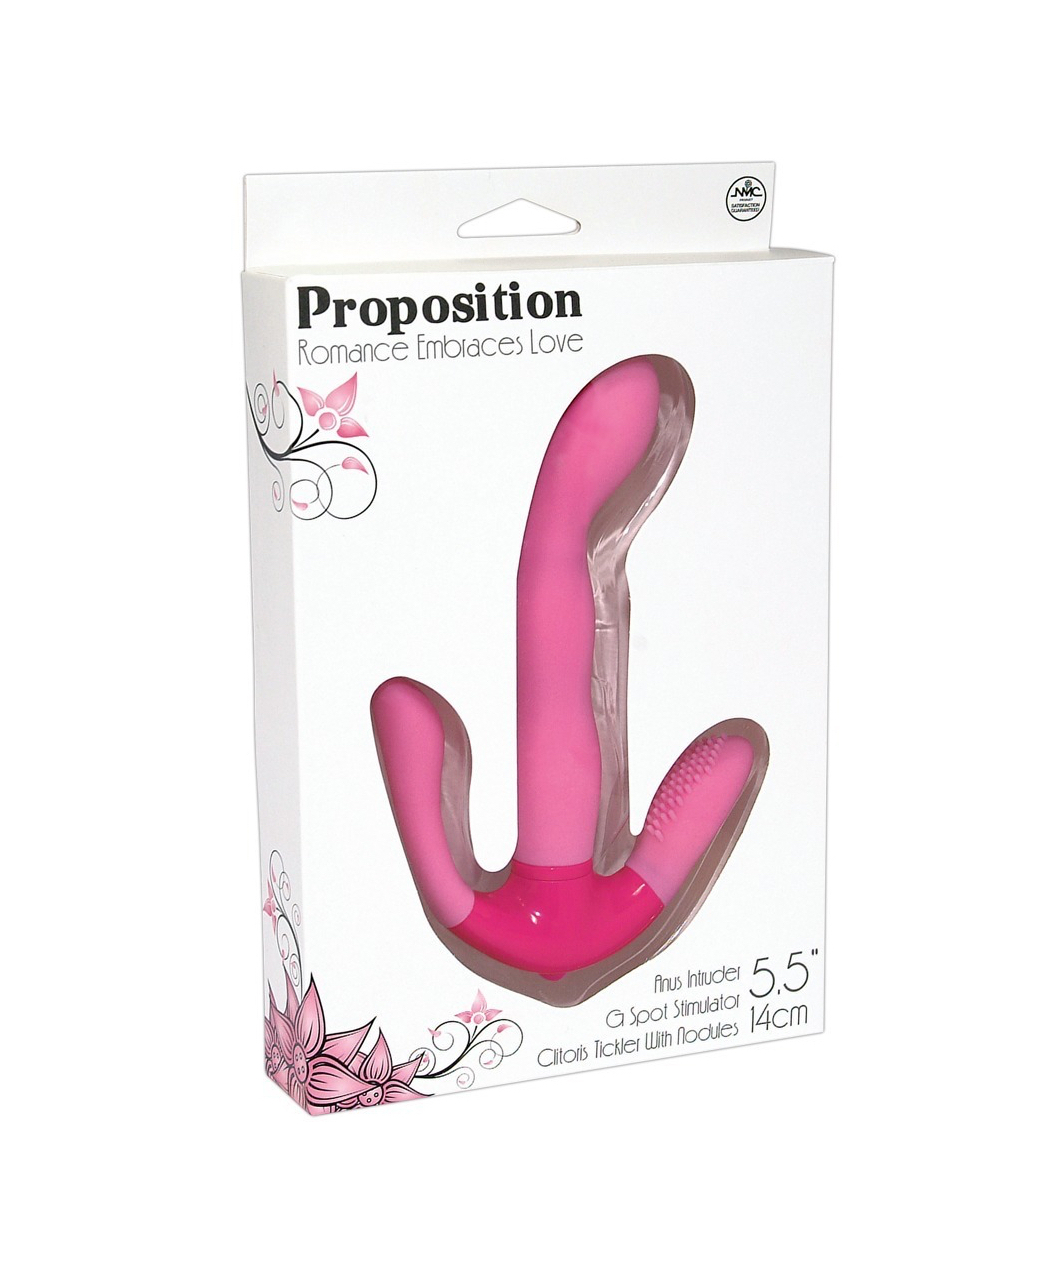 NMC Proposition vibrator